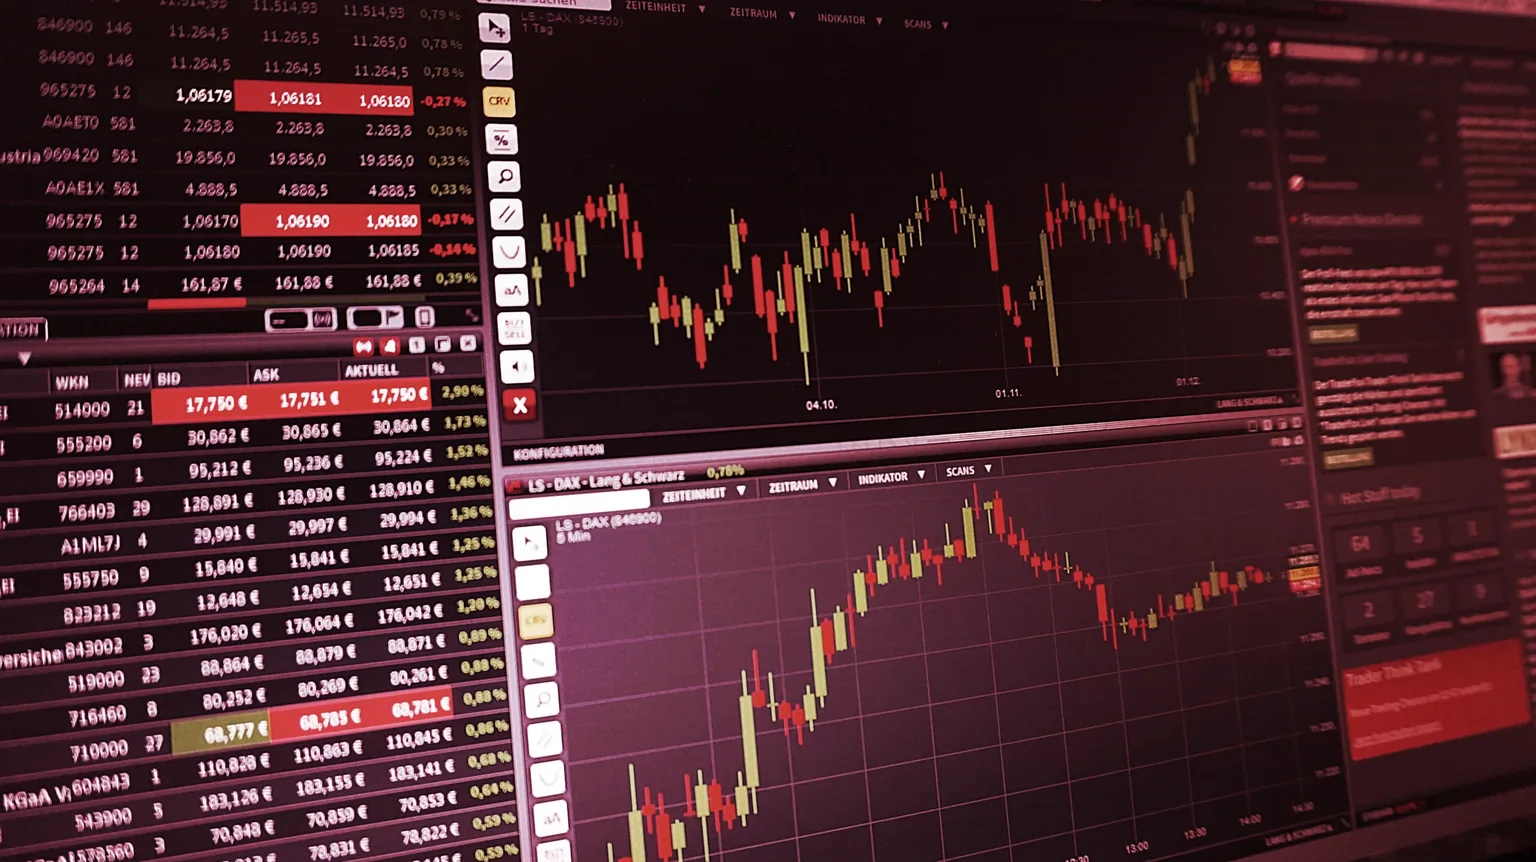 Crypto trading is facing increasing scrutiny from regulators (Image: Pxfuel)